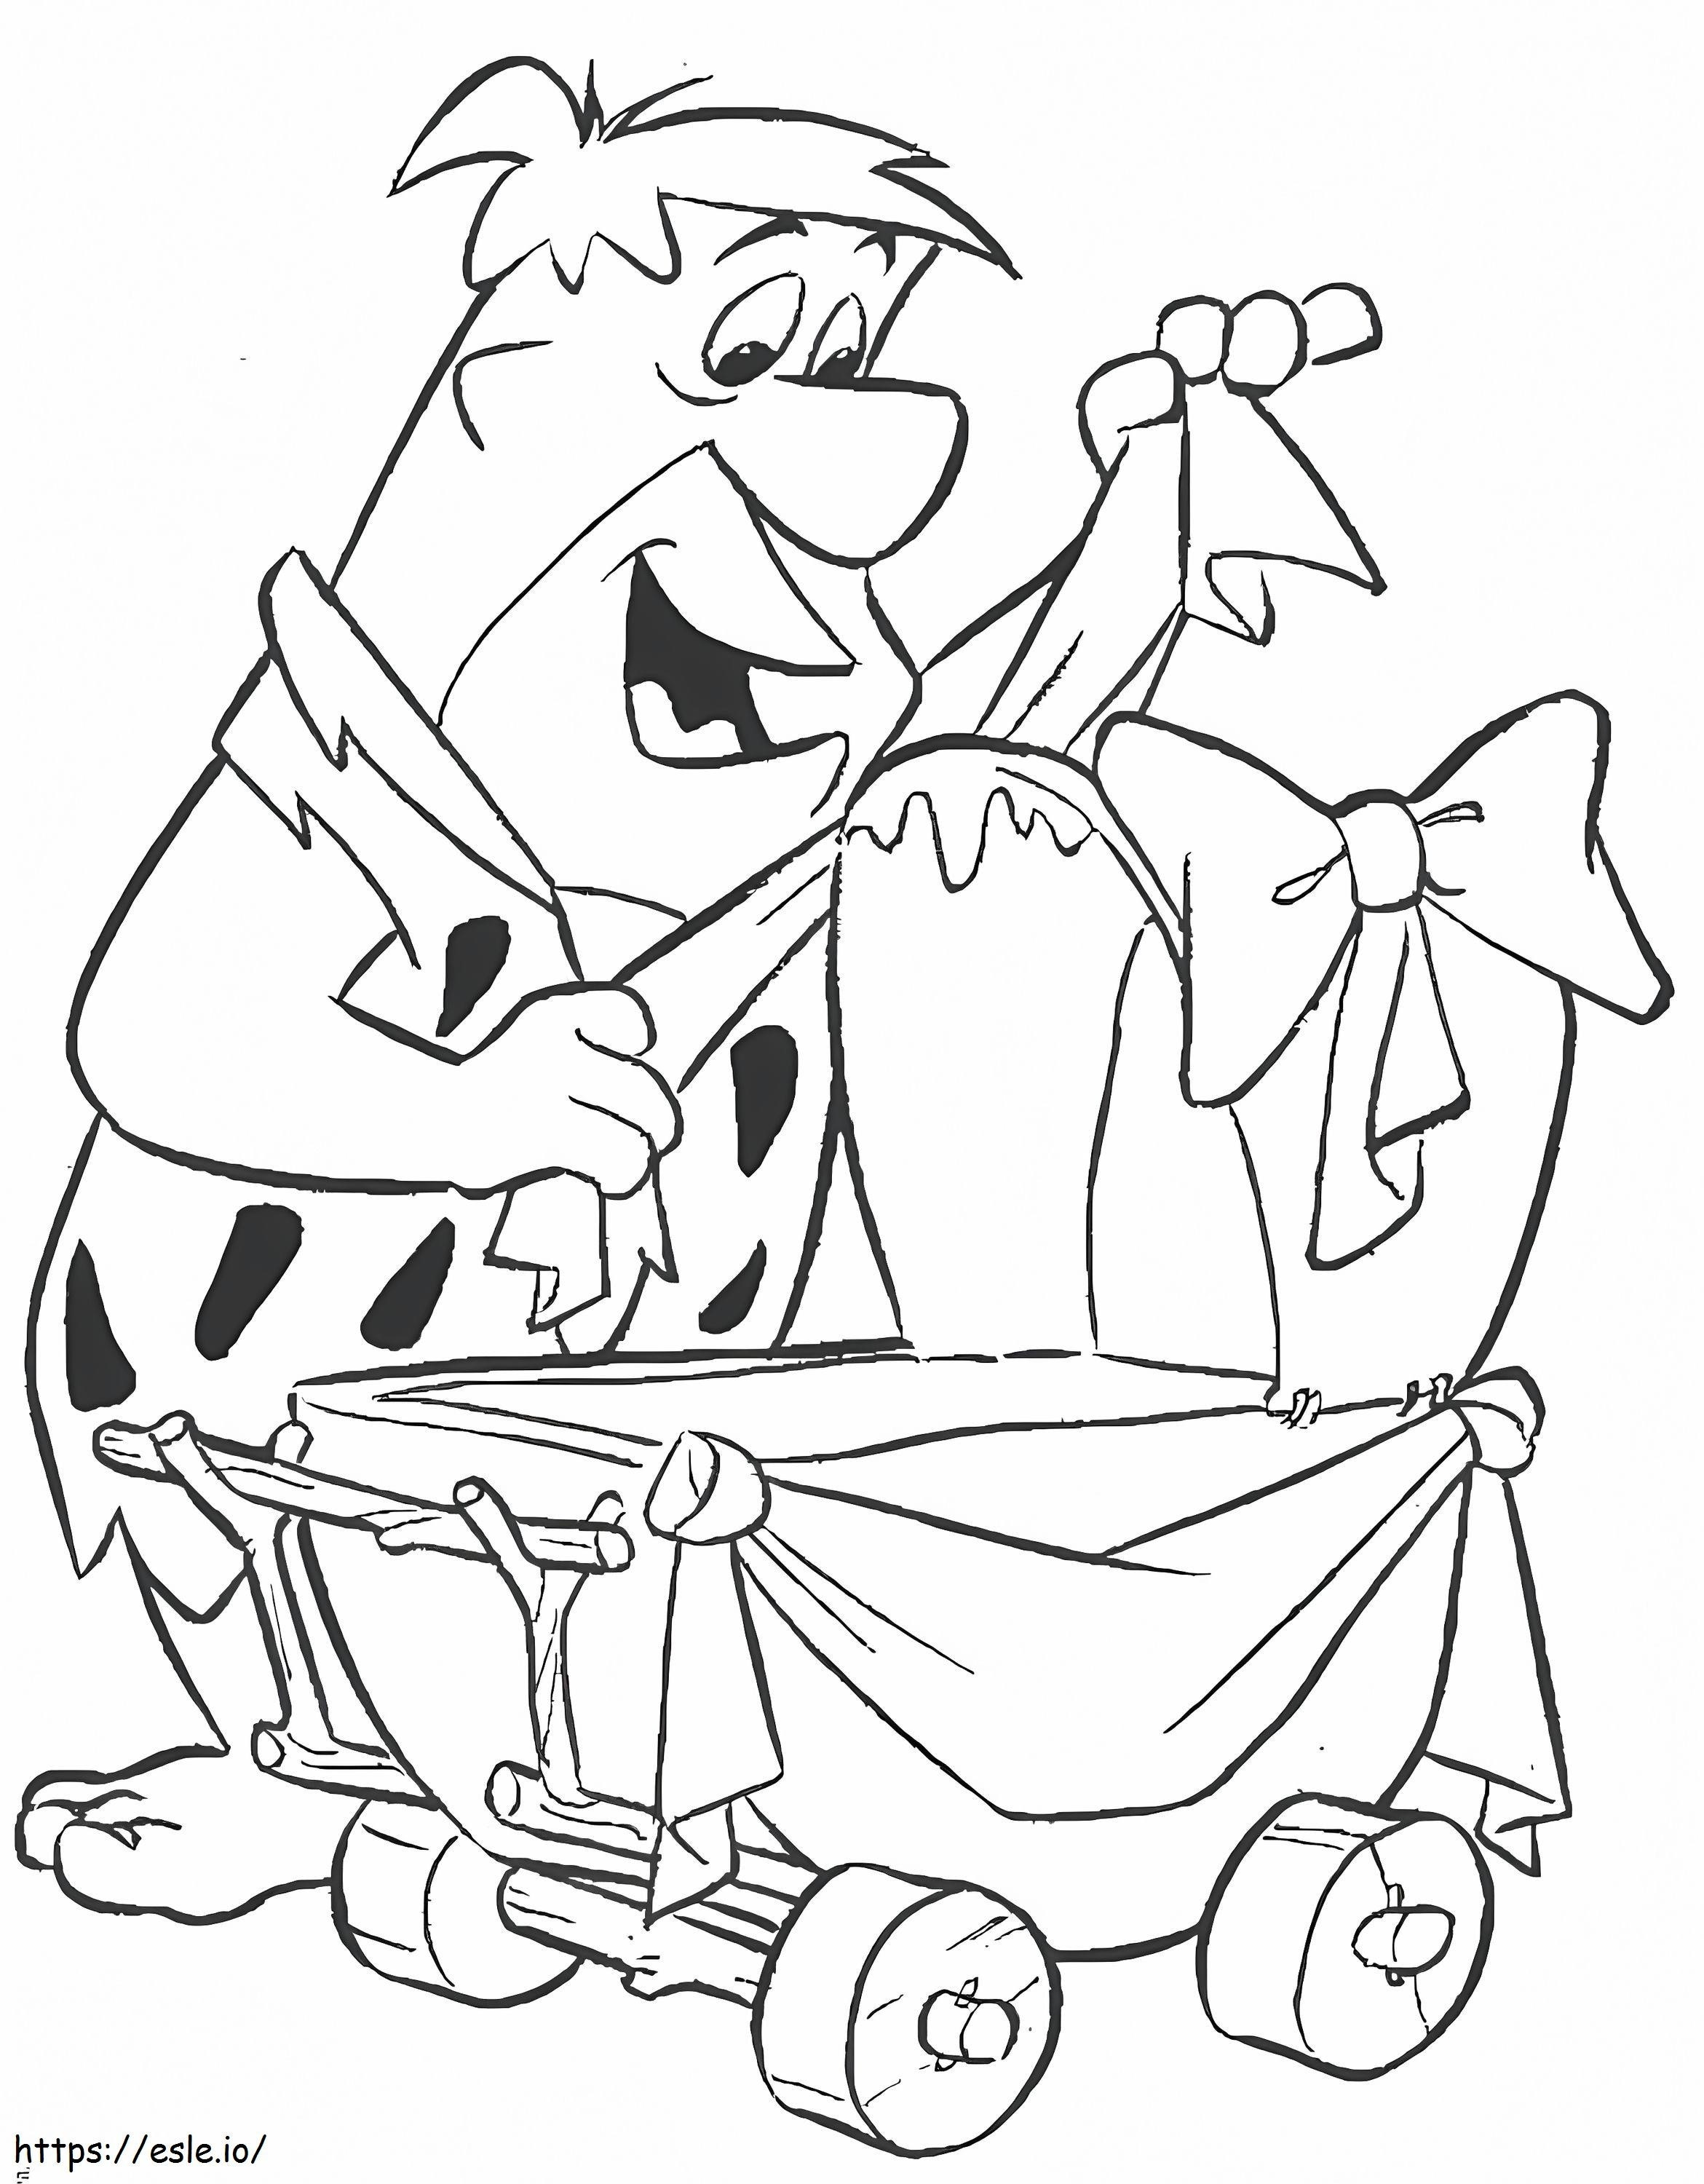 Fred Flintstone e o bebê para colorir